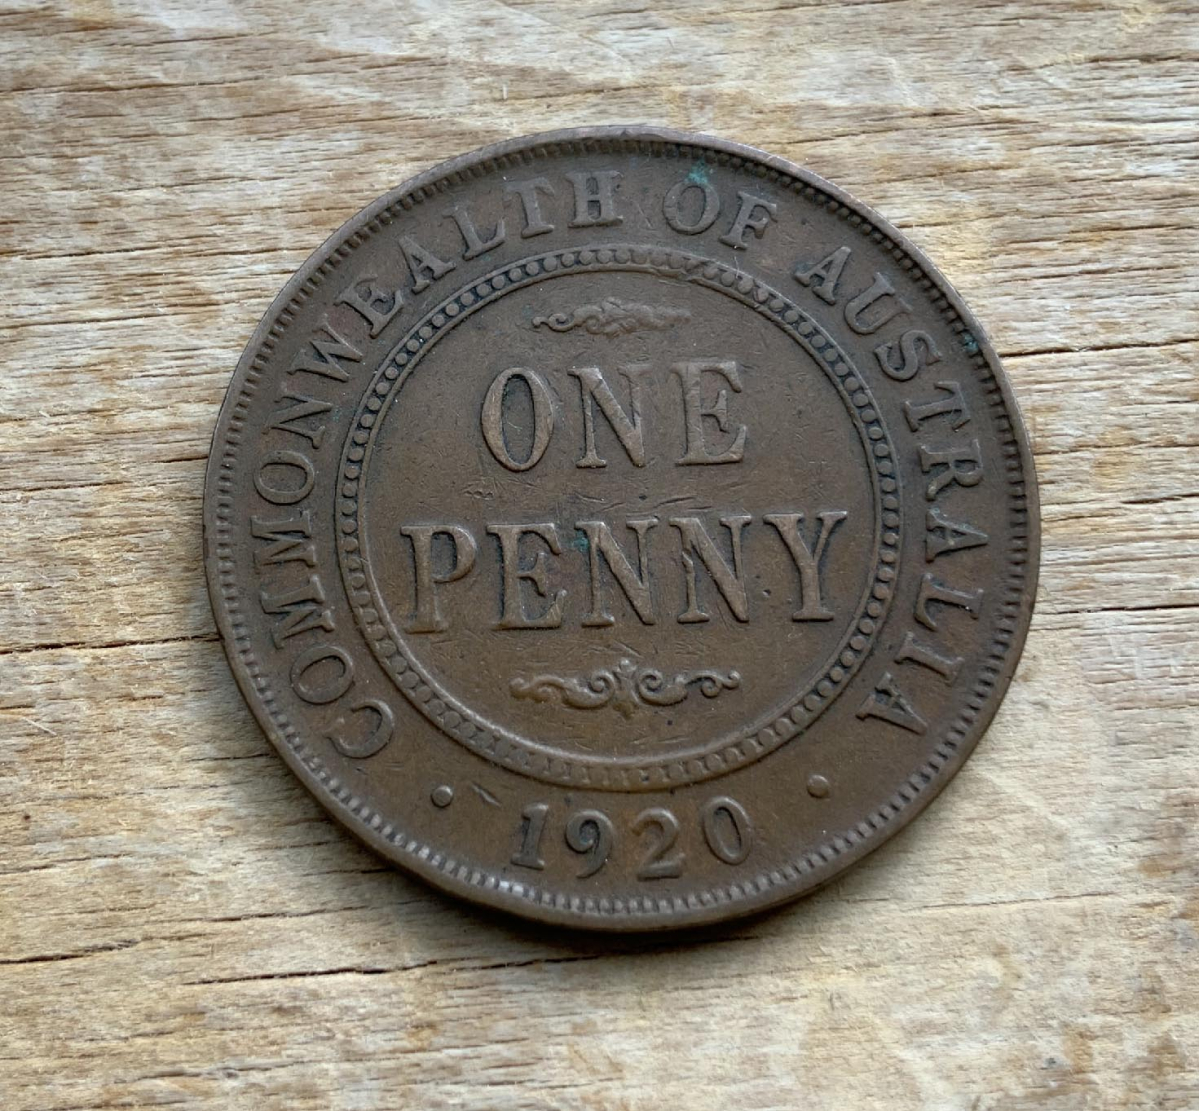 Scarce 1920 no dots Australian penny coin C335